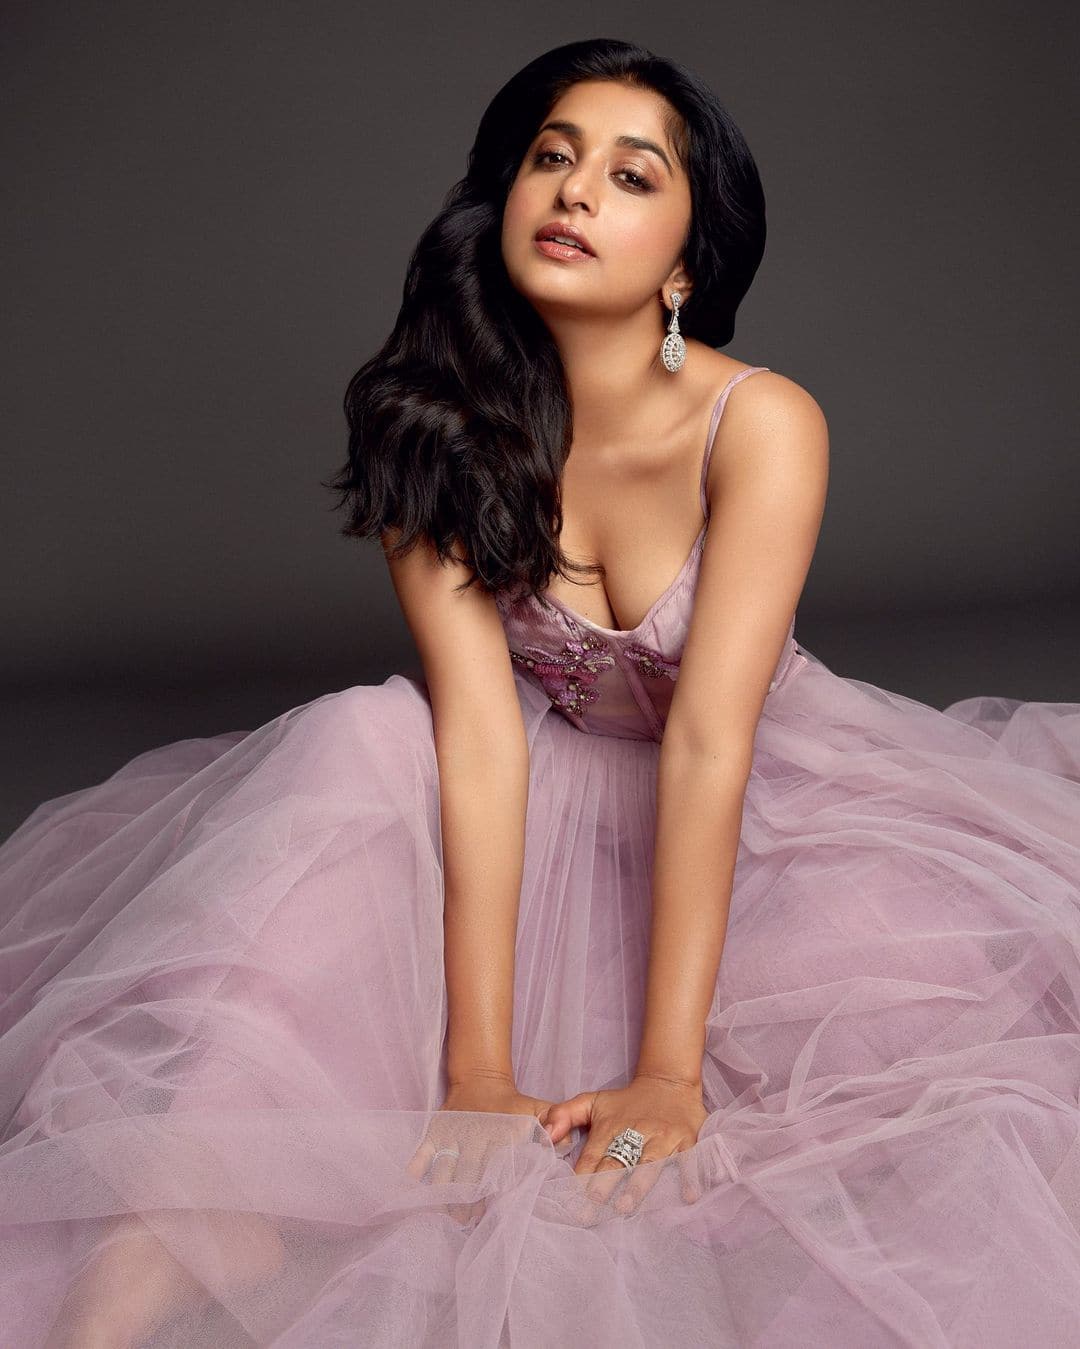 Mira Jasmine's sexy incarnation rocks fans after posting photos on social media after a long hiatus